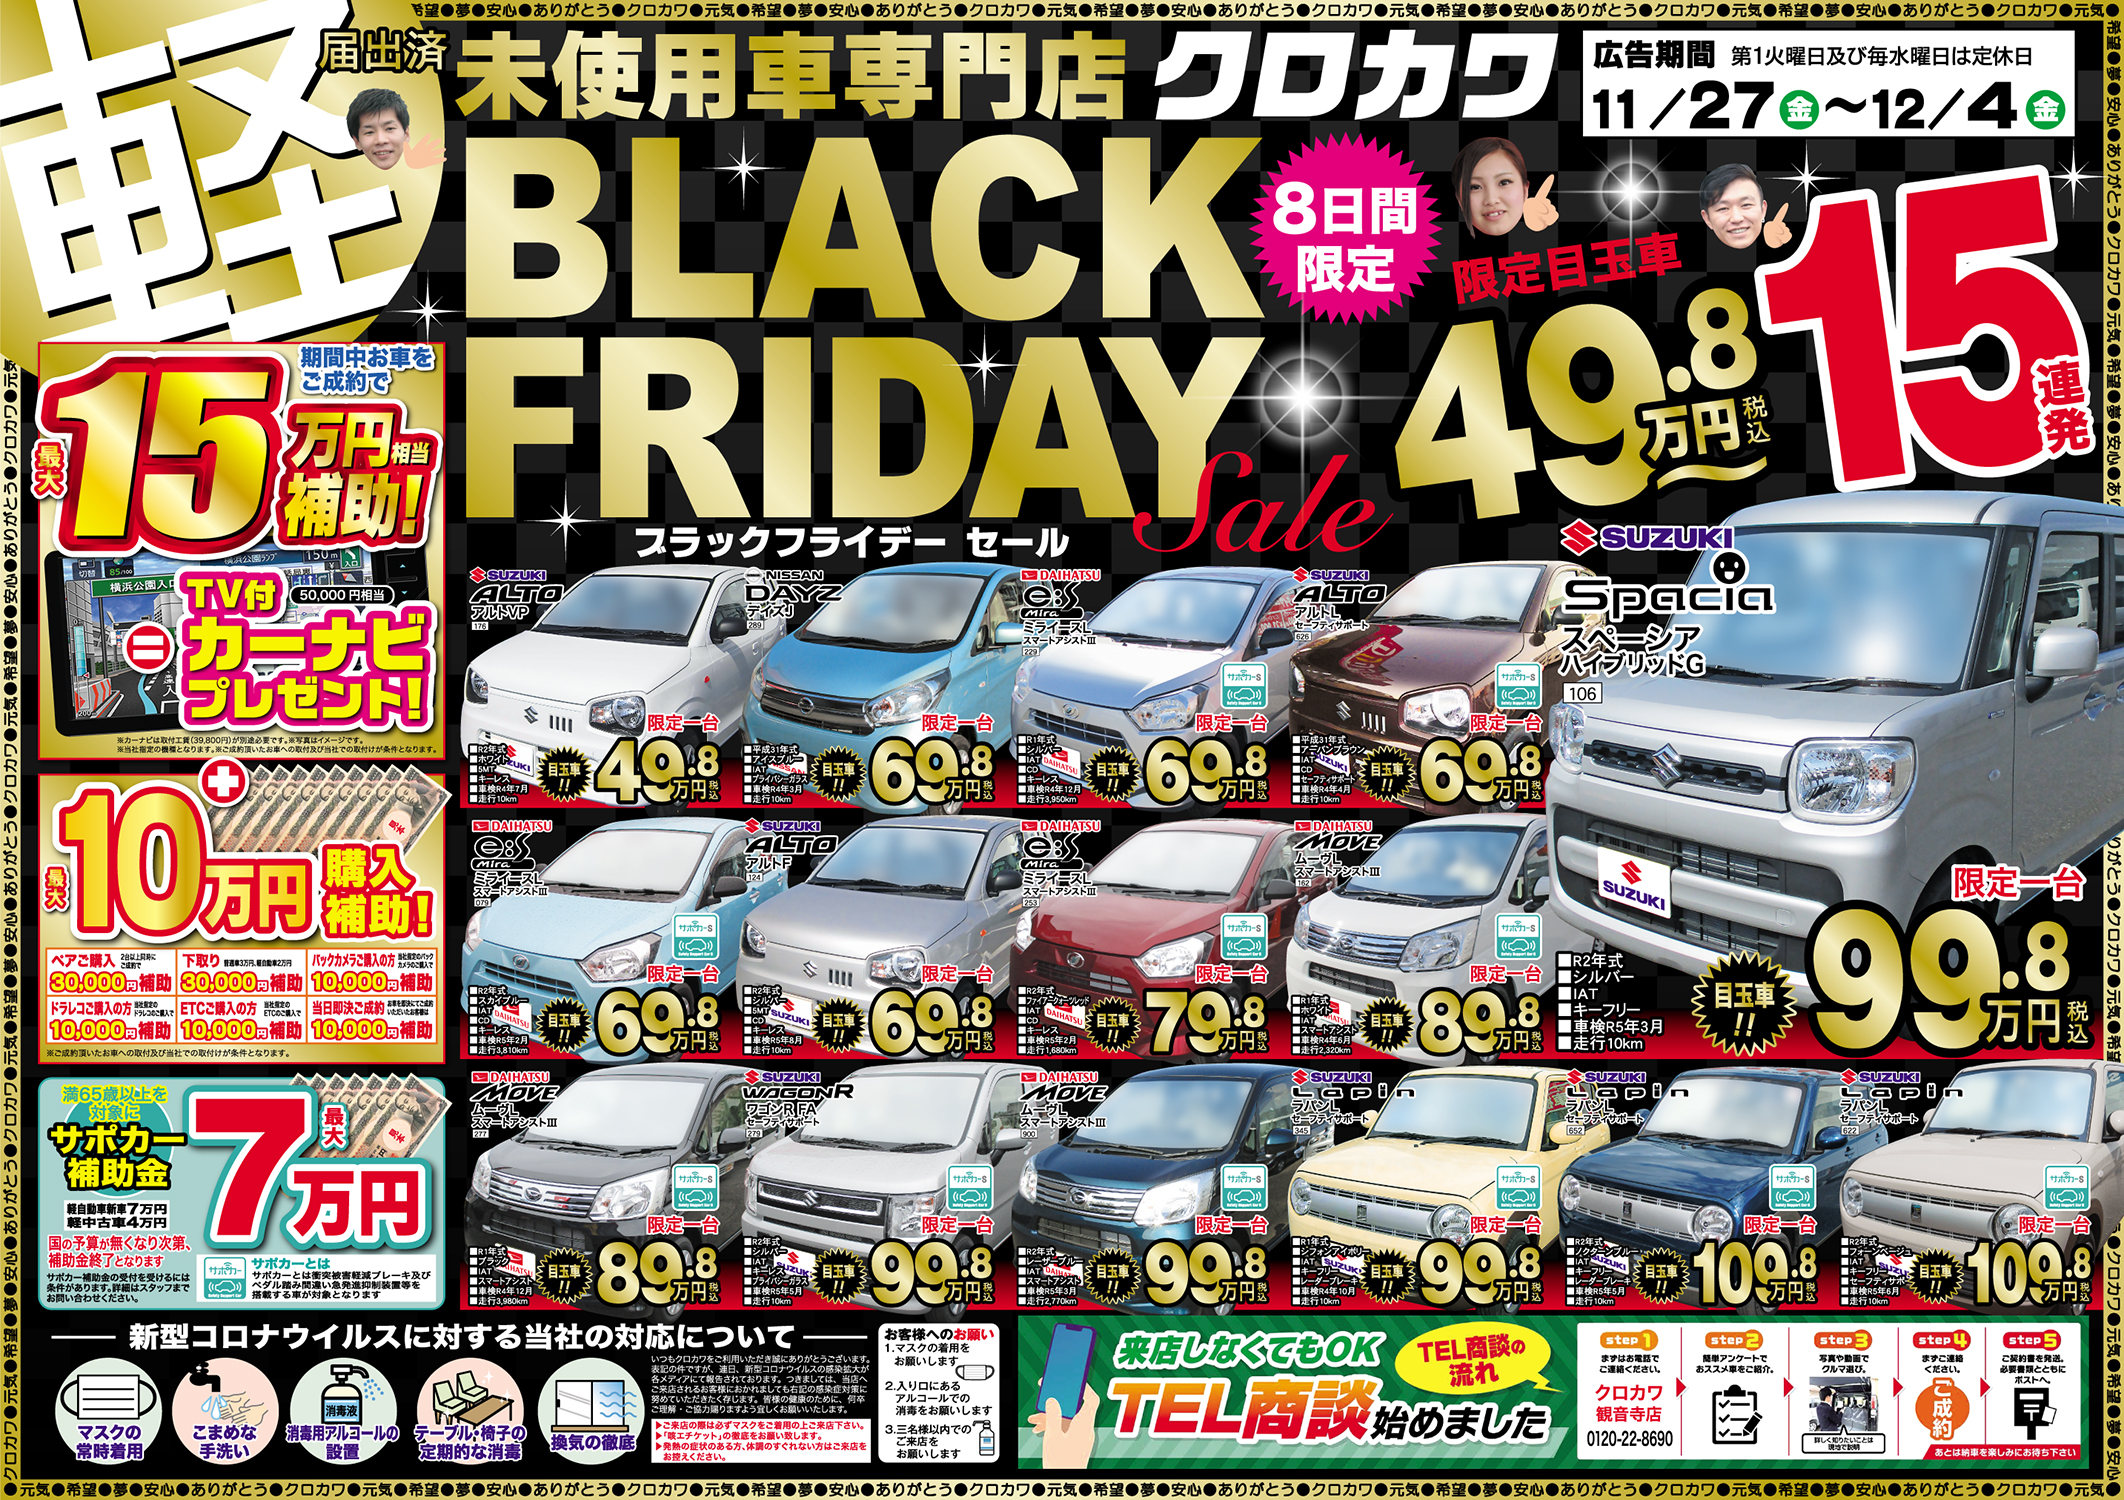 【BLACK FRIDAY SALE】限定目玉車49.8万円〜